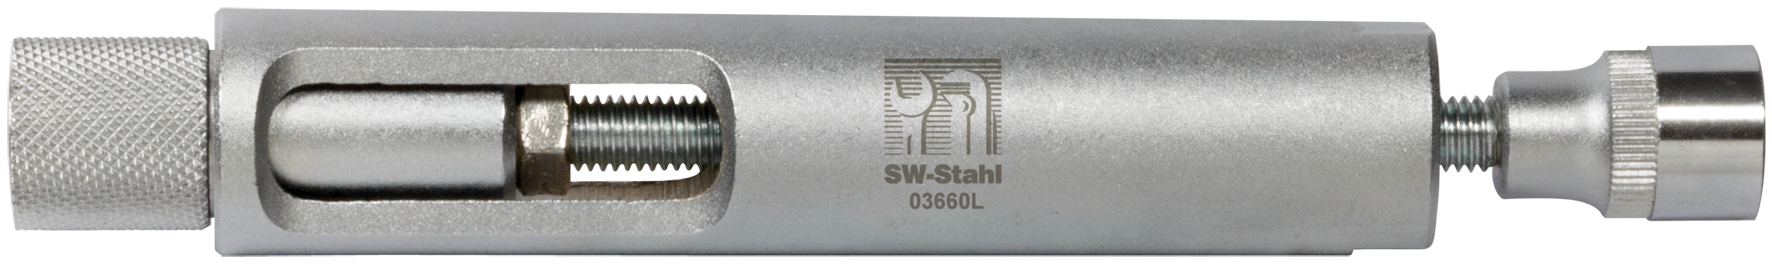 SWSTAHL Glühkerzen-Ausbauwerkzeug 03660L